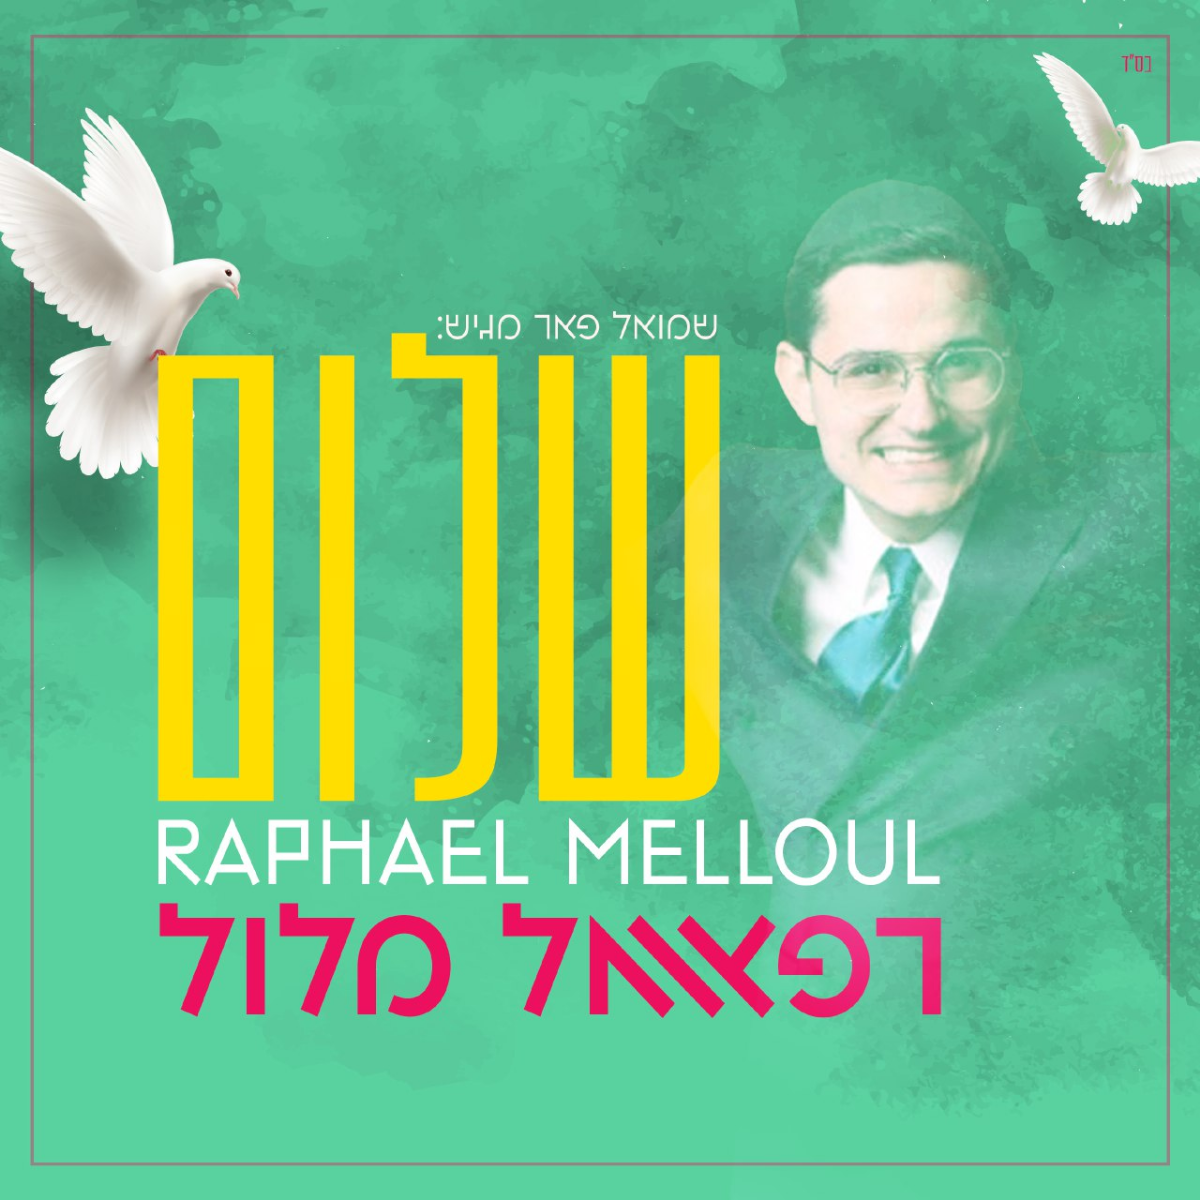 Raphael Melloul - Shalom (Single)